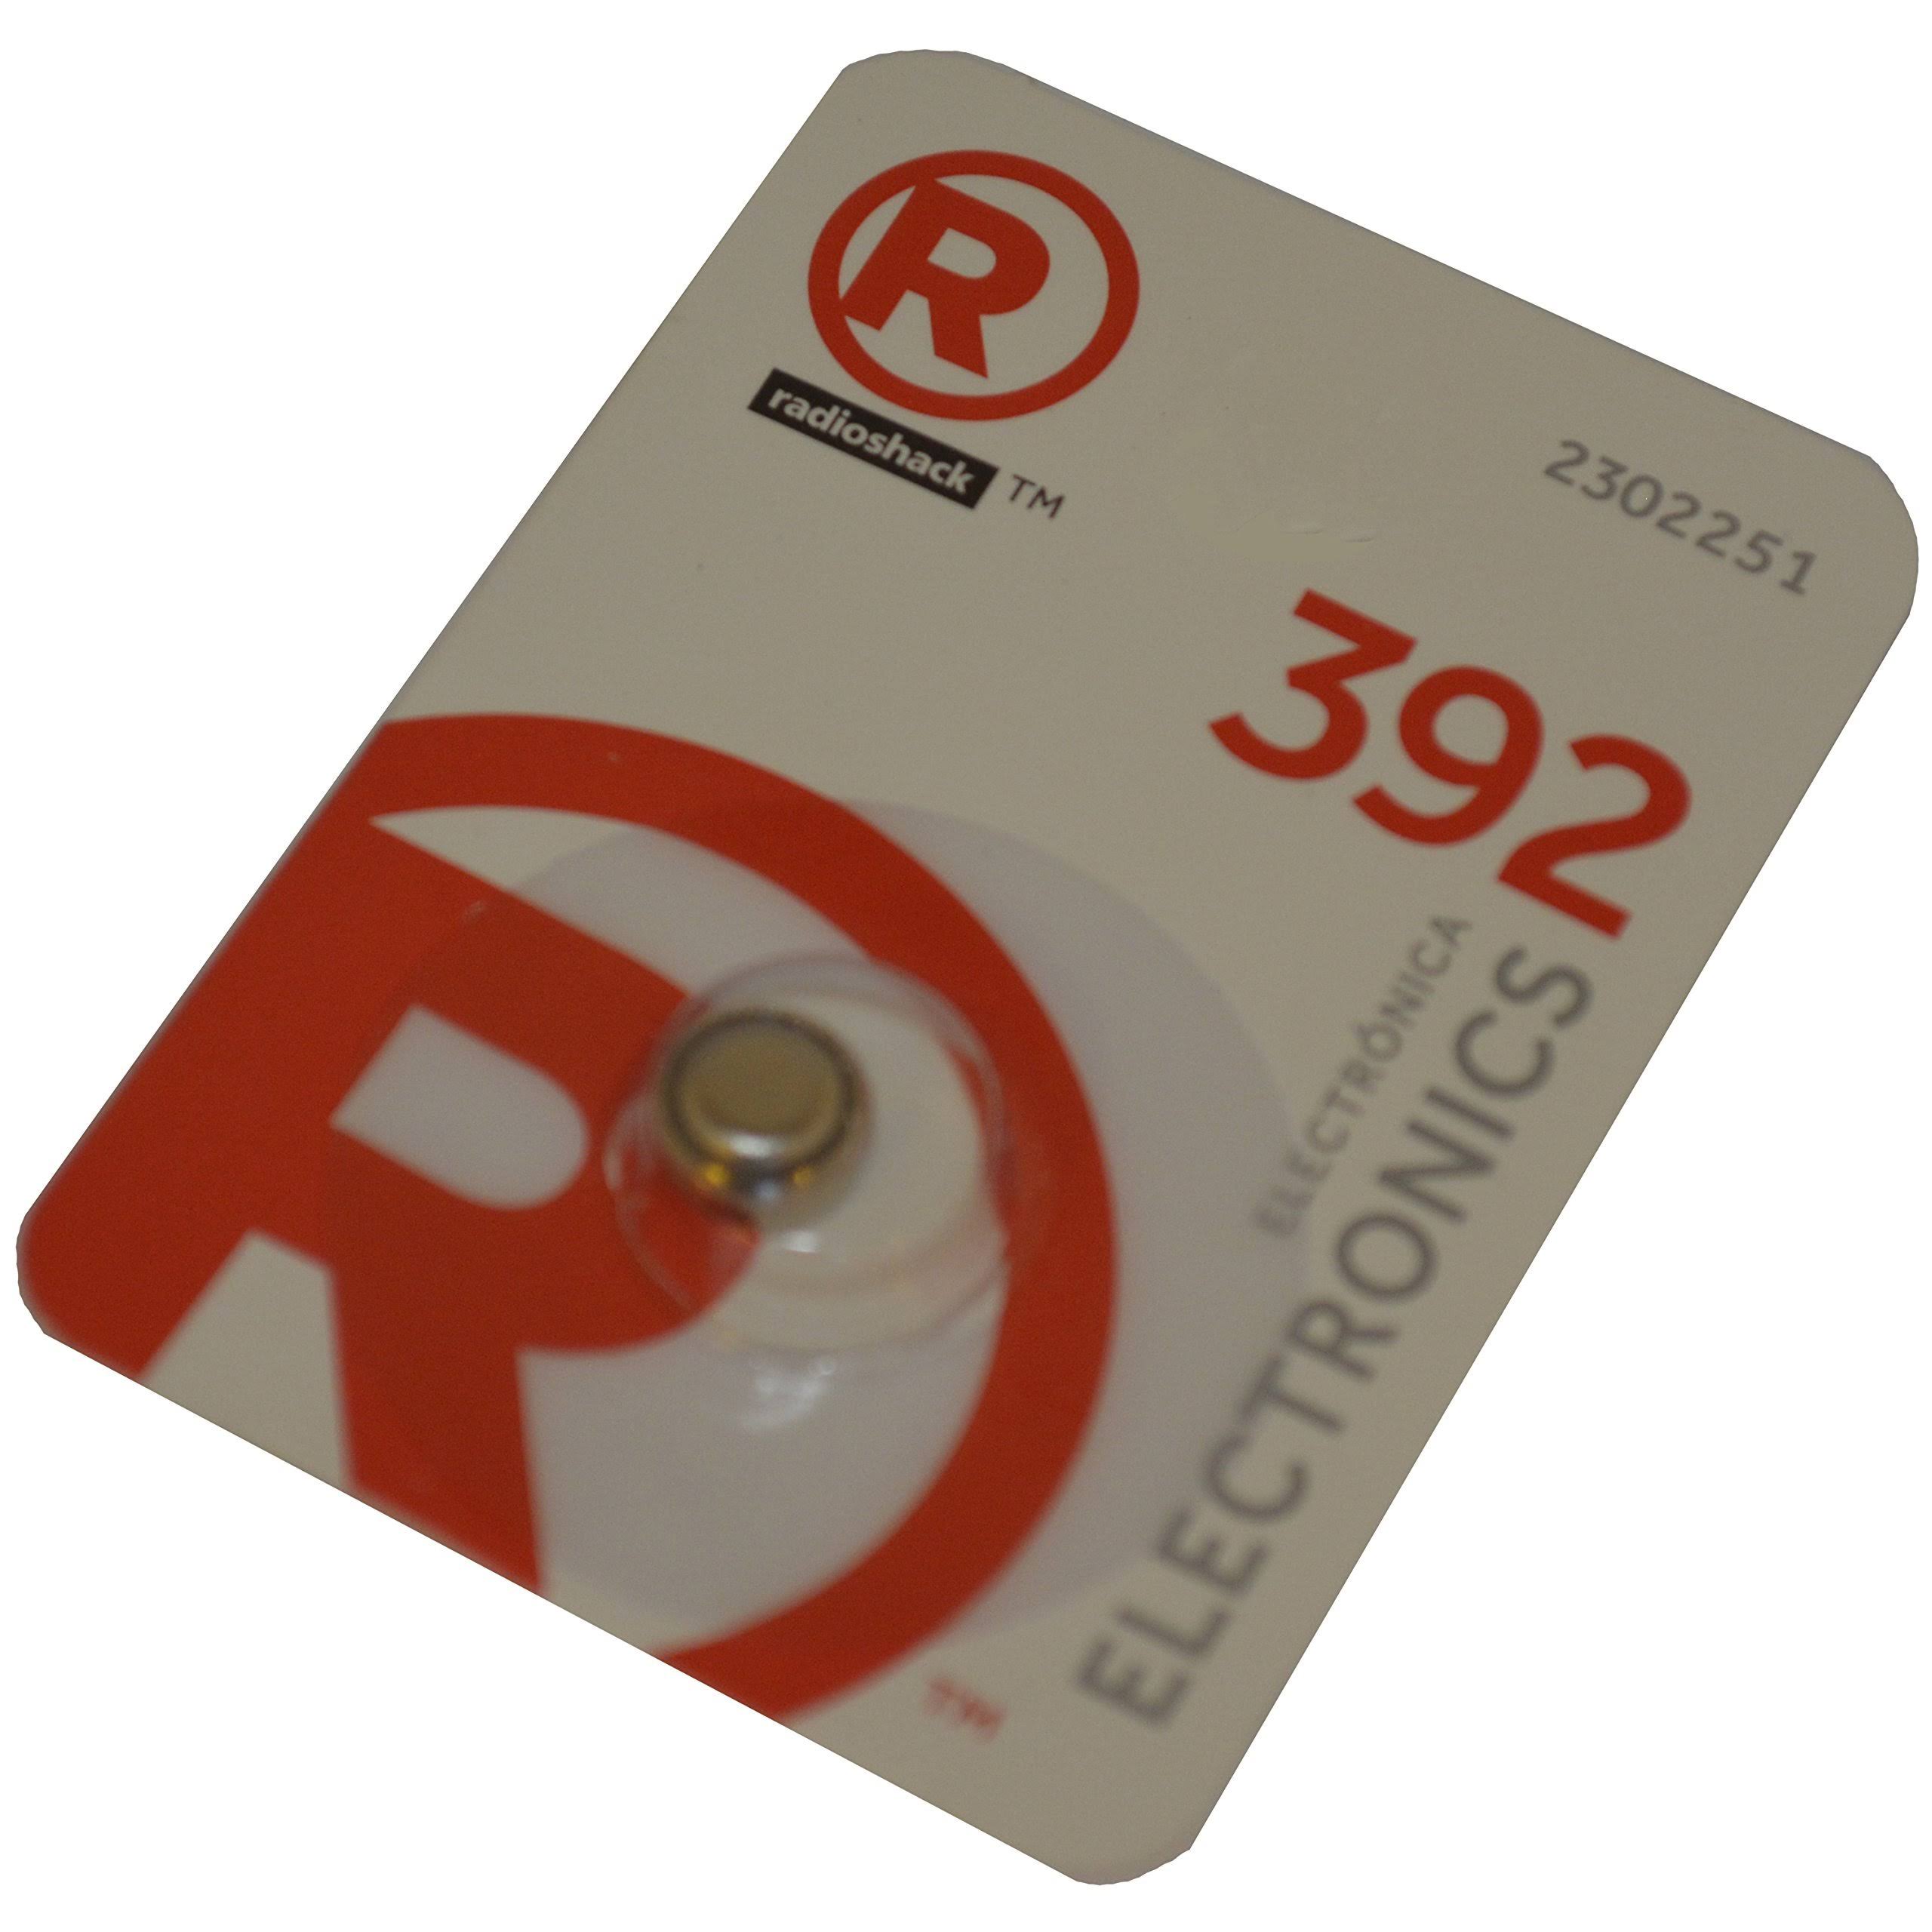 RadioShack 392 1.55V/42MAH Silver-Oxide Button Cell Battery by RadioShack